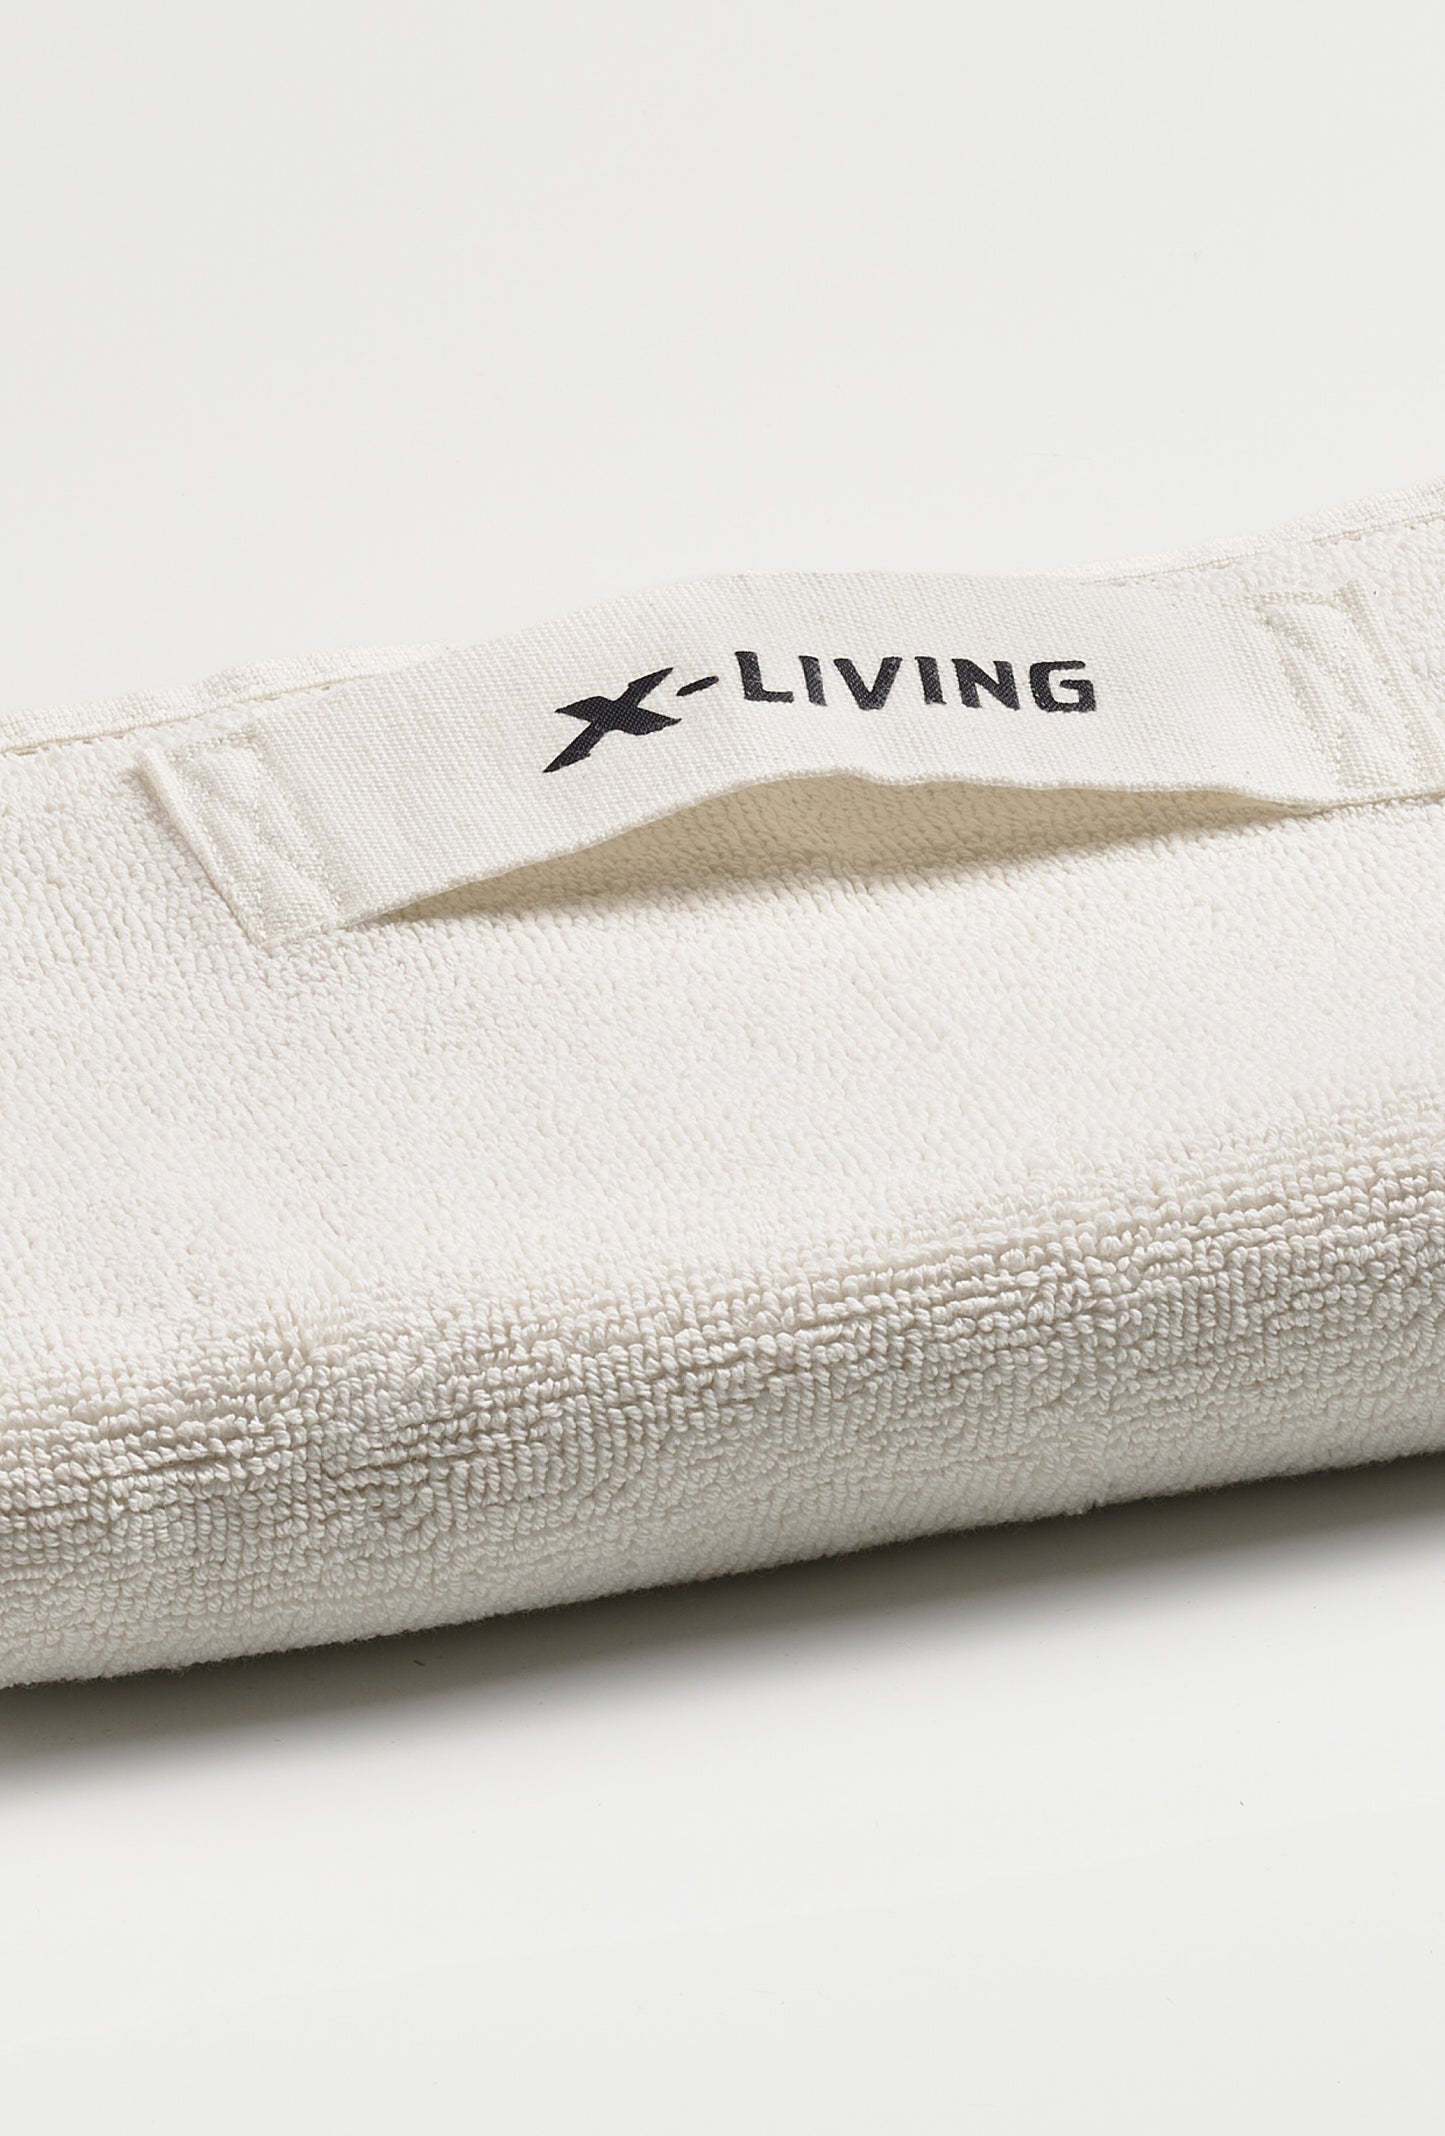 Calm hand towel - White (40x70)